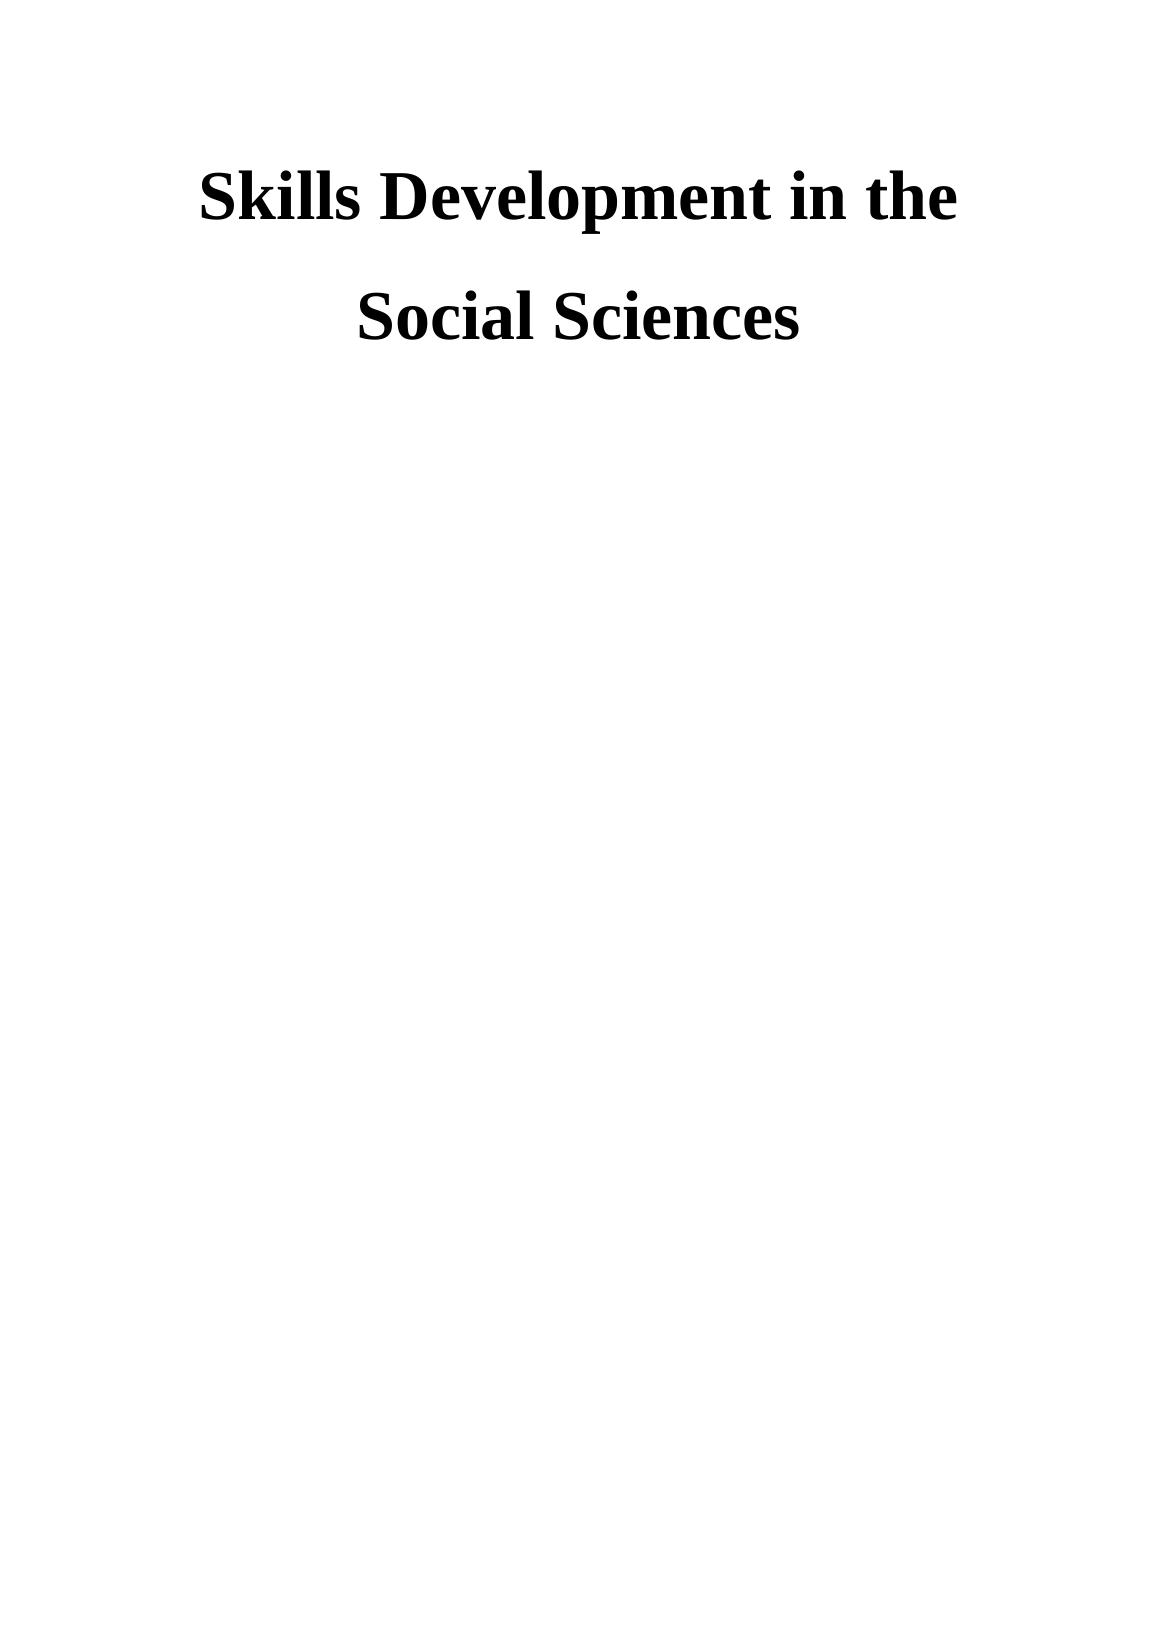 Skills Development in the Social Sciences_1